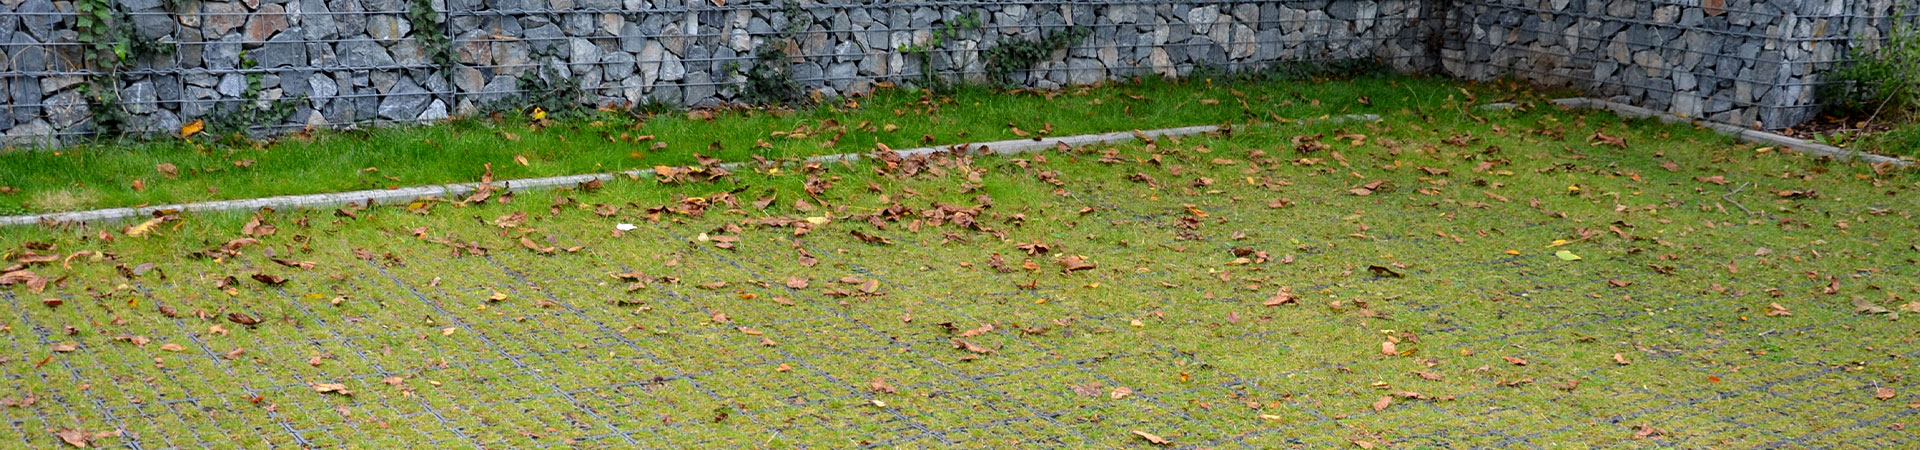 Rasengitter befahrbar - Grünflache mit Herbstlaub